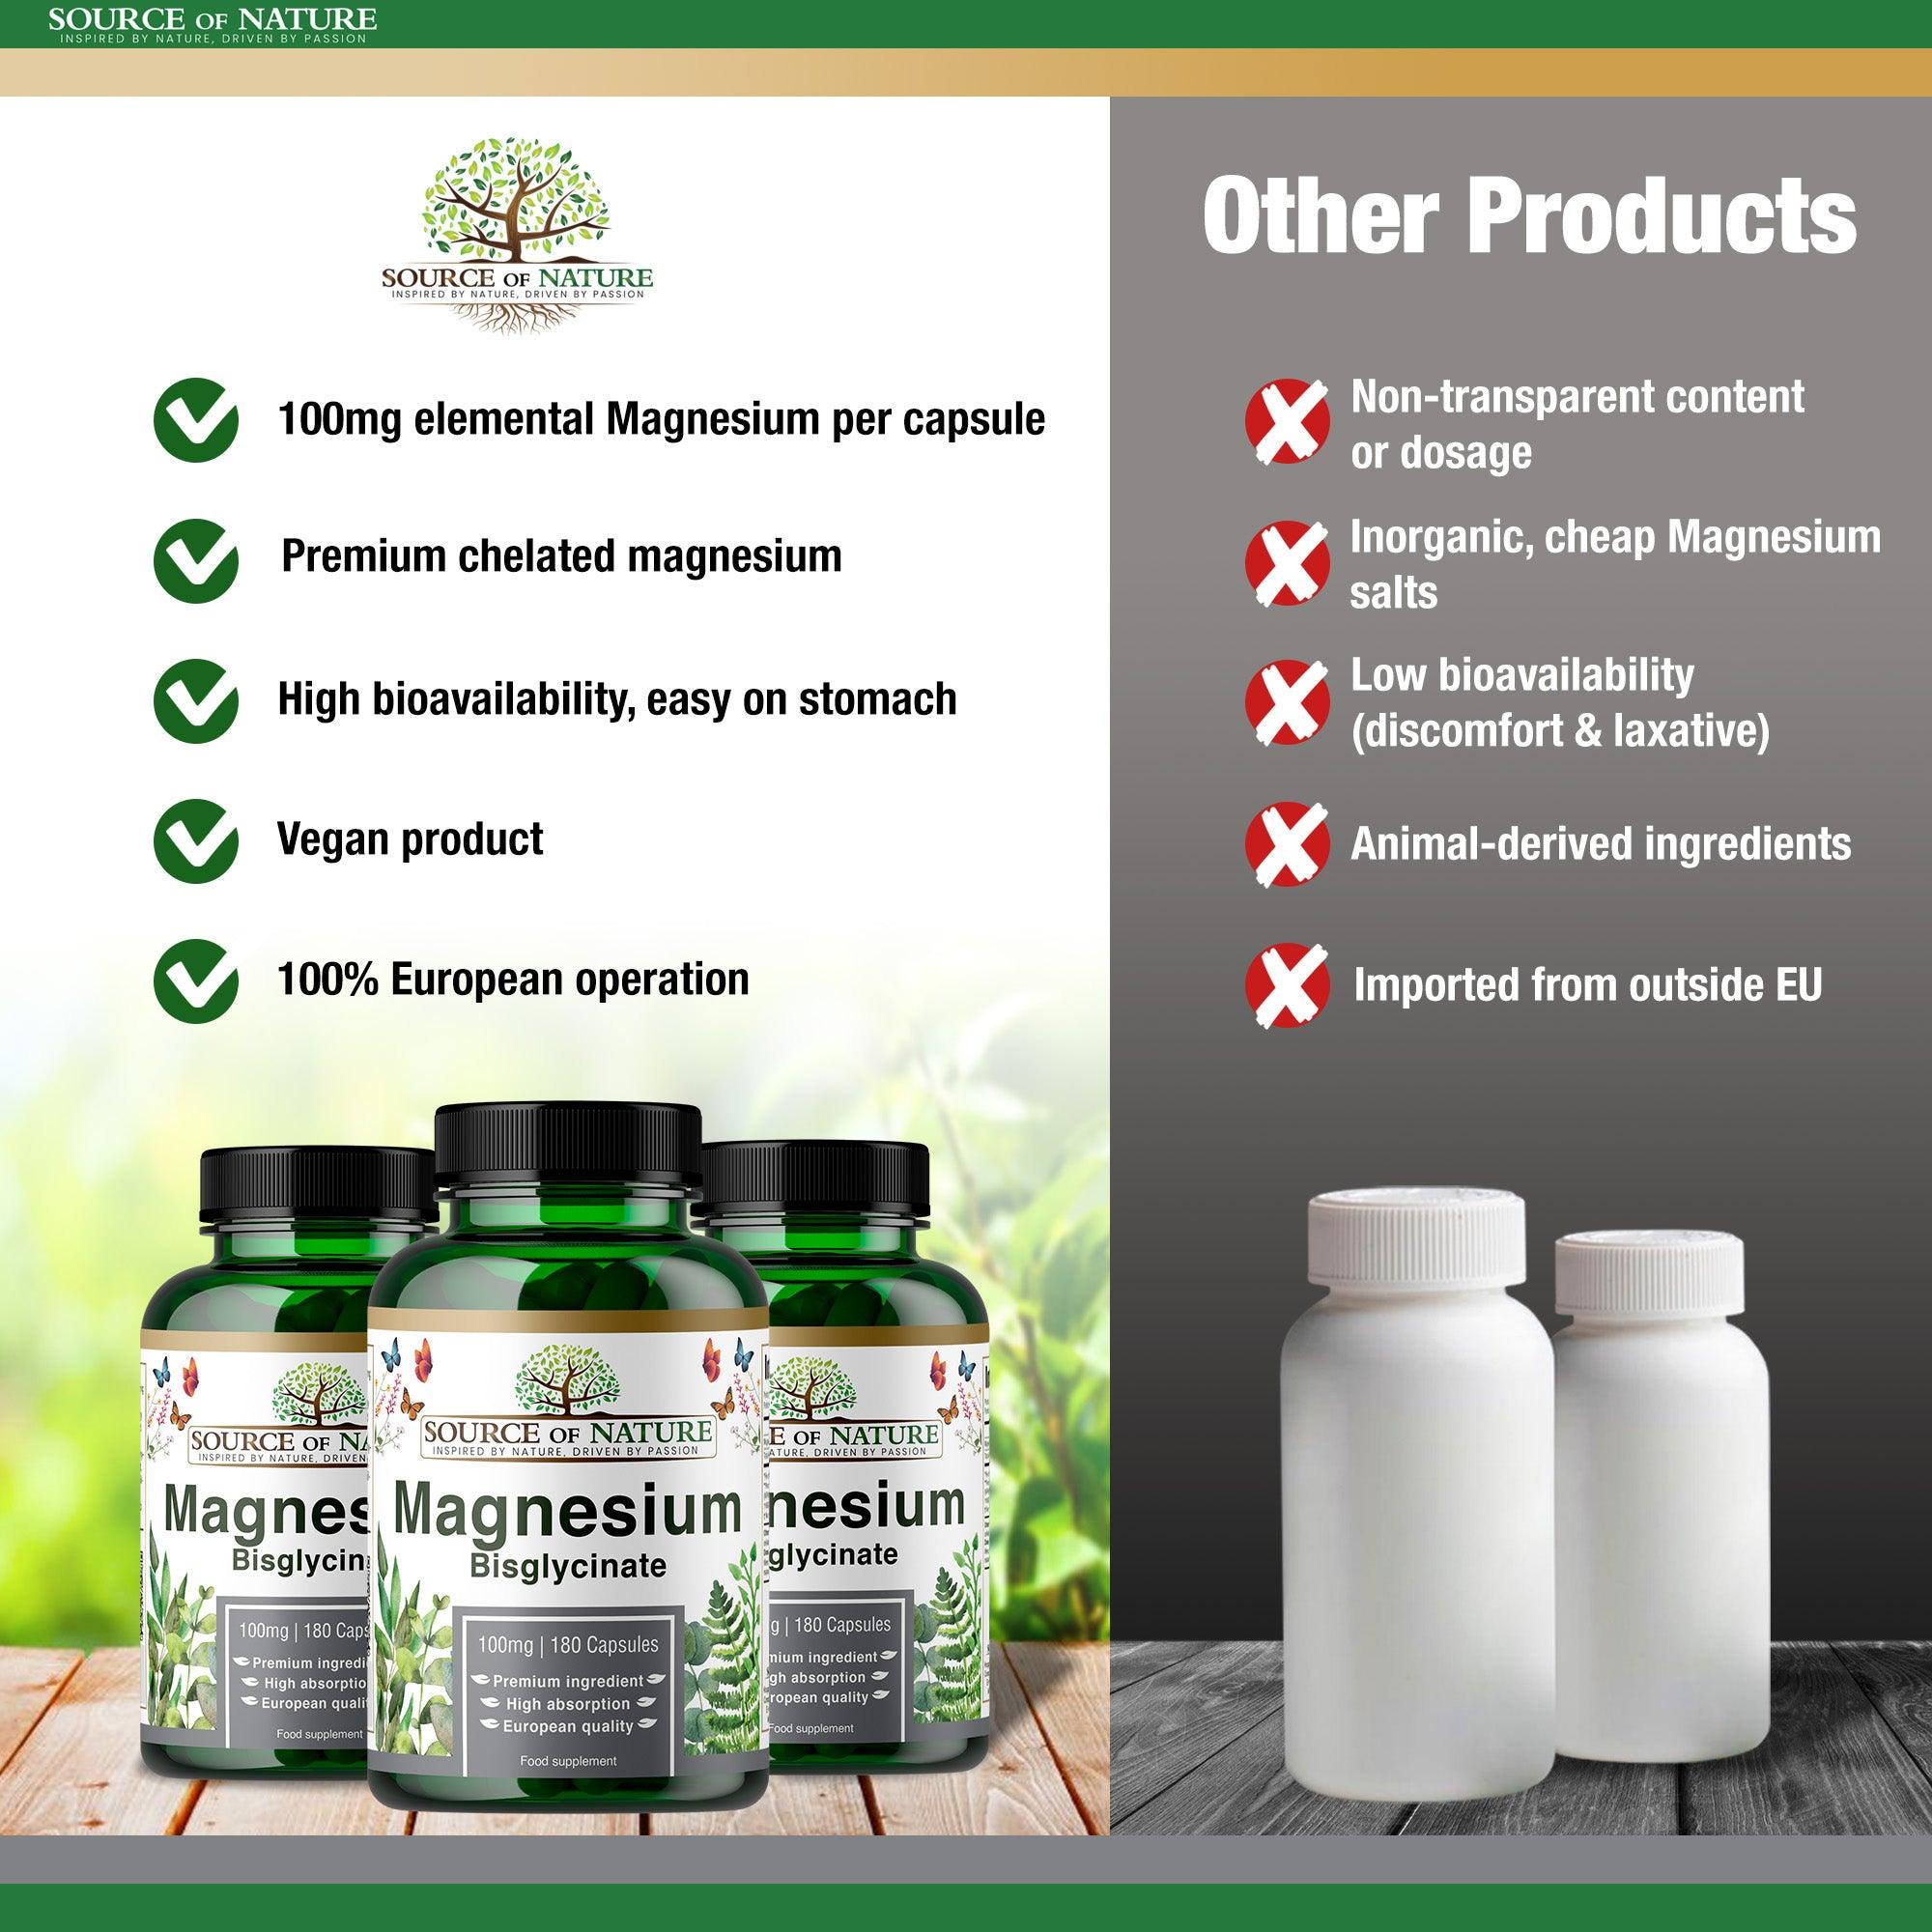 Magnesium Bisglycinat 770mg | 180 Kapseln | 3-Monats-Versorgung - Source of Nature